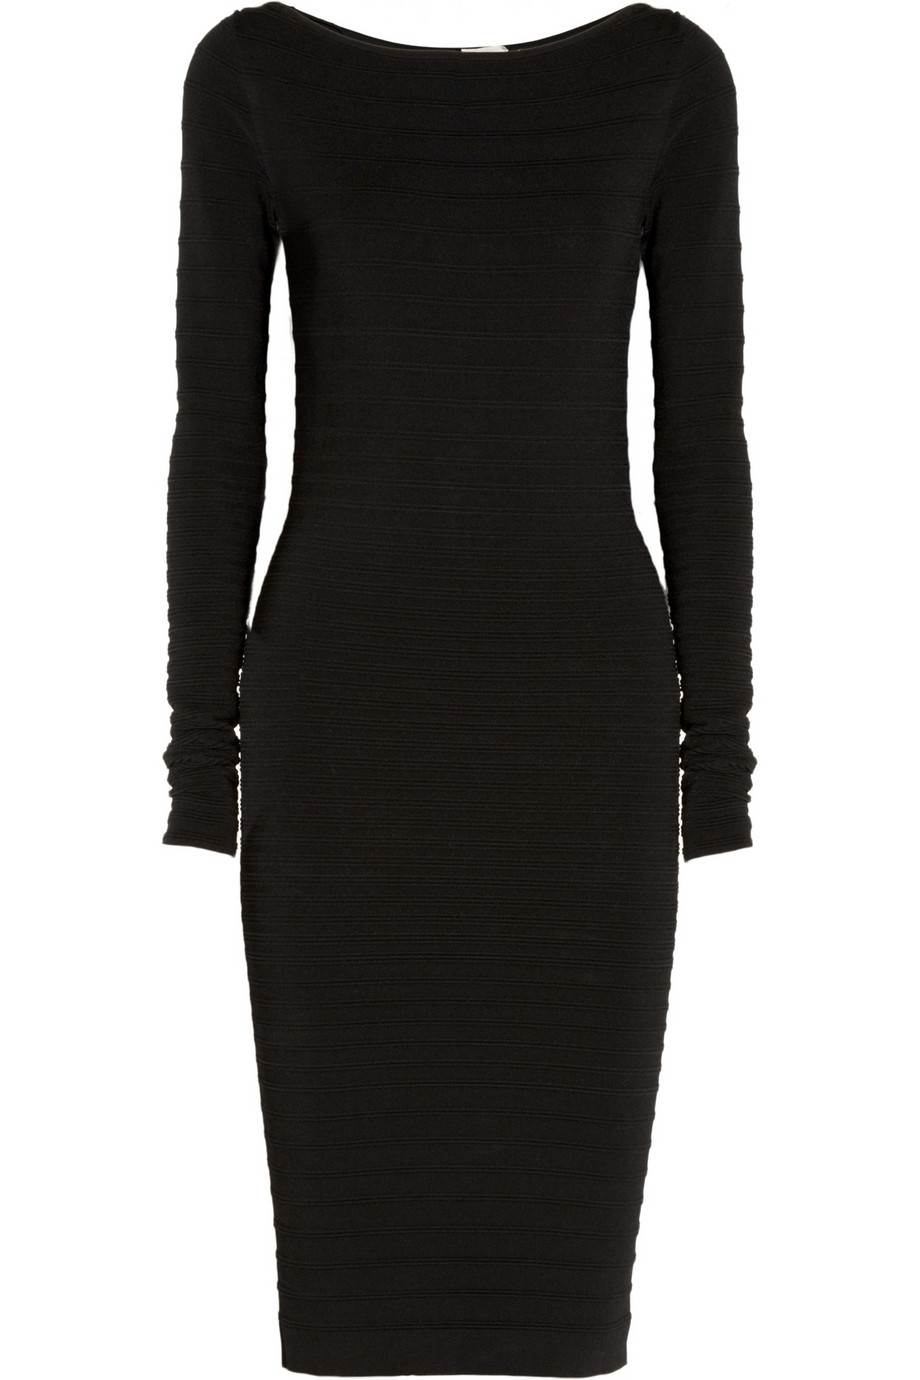 Lyst - Donna Karan Ribbed Stretch Knit Dress in Black